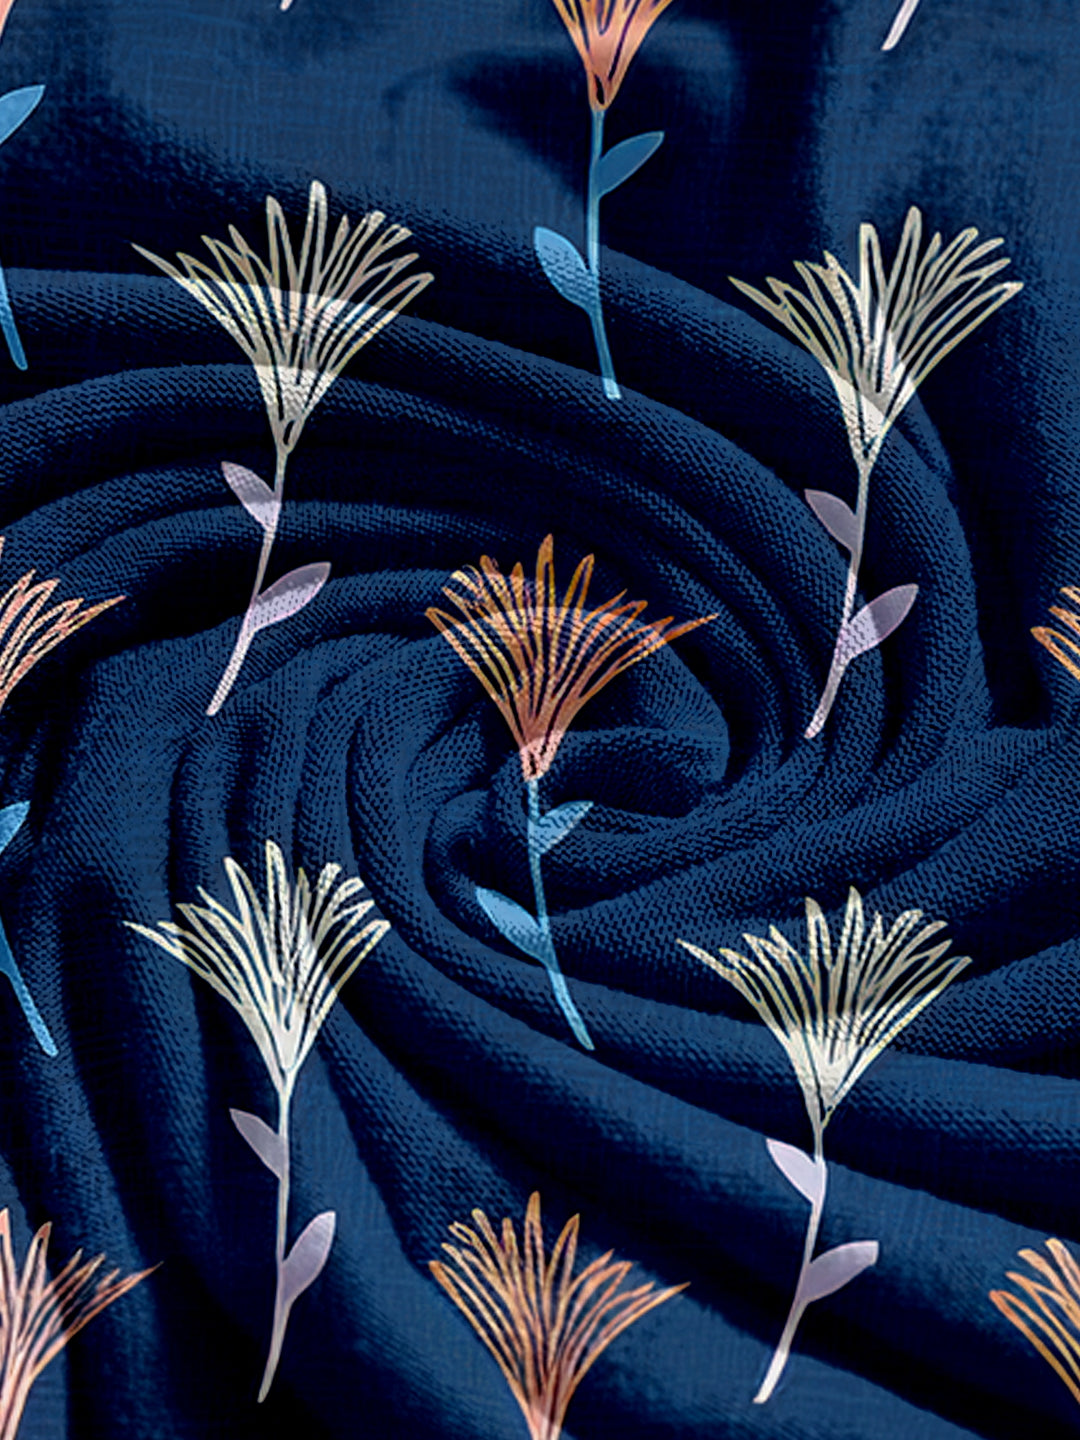 Elastic Floral Printed Sofa Cover 1 Seater- Dark Blue